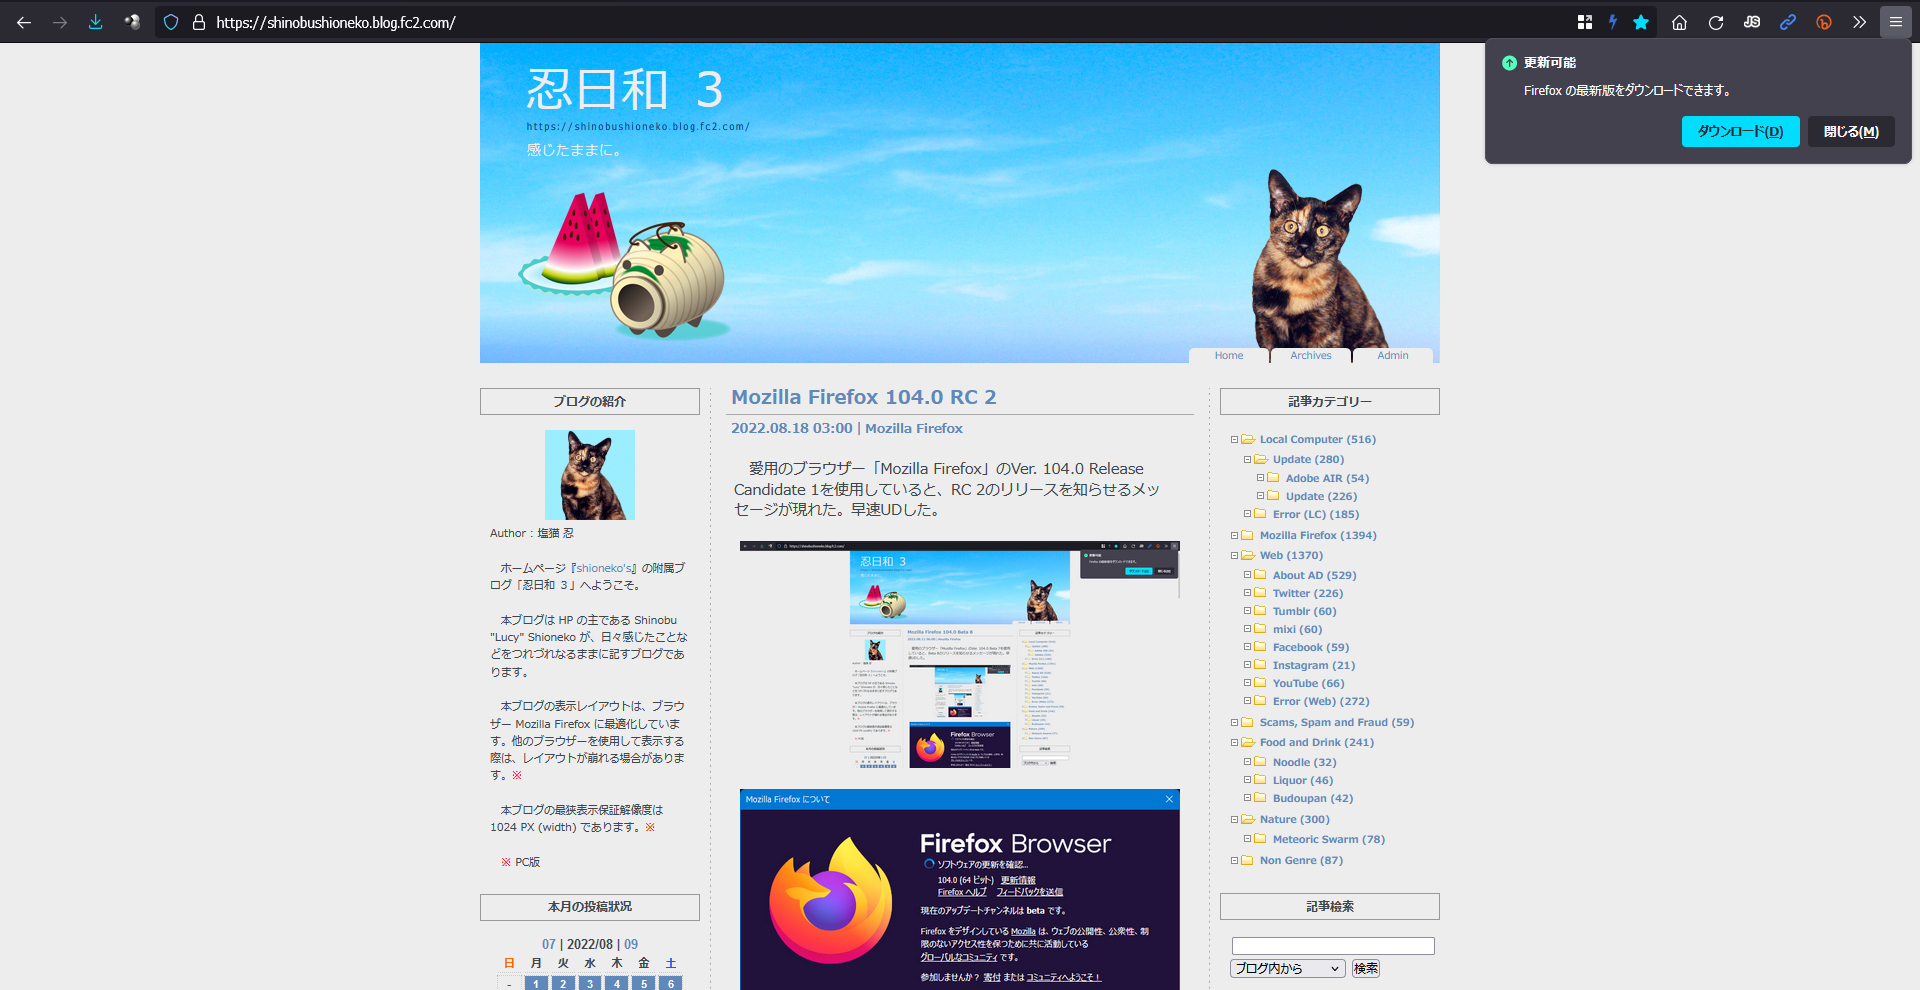 Mozilla Firefox 105.0 Beta 2